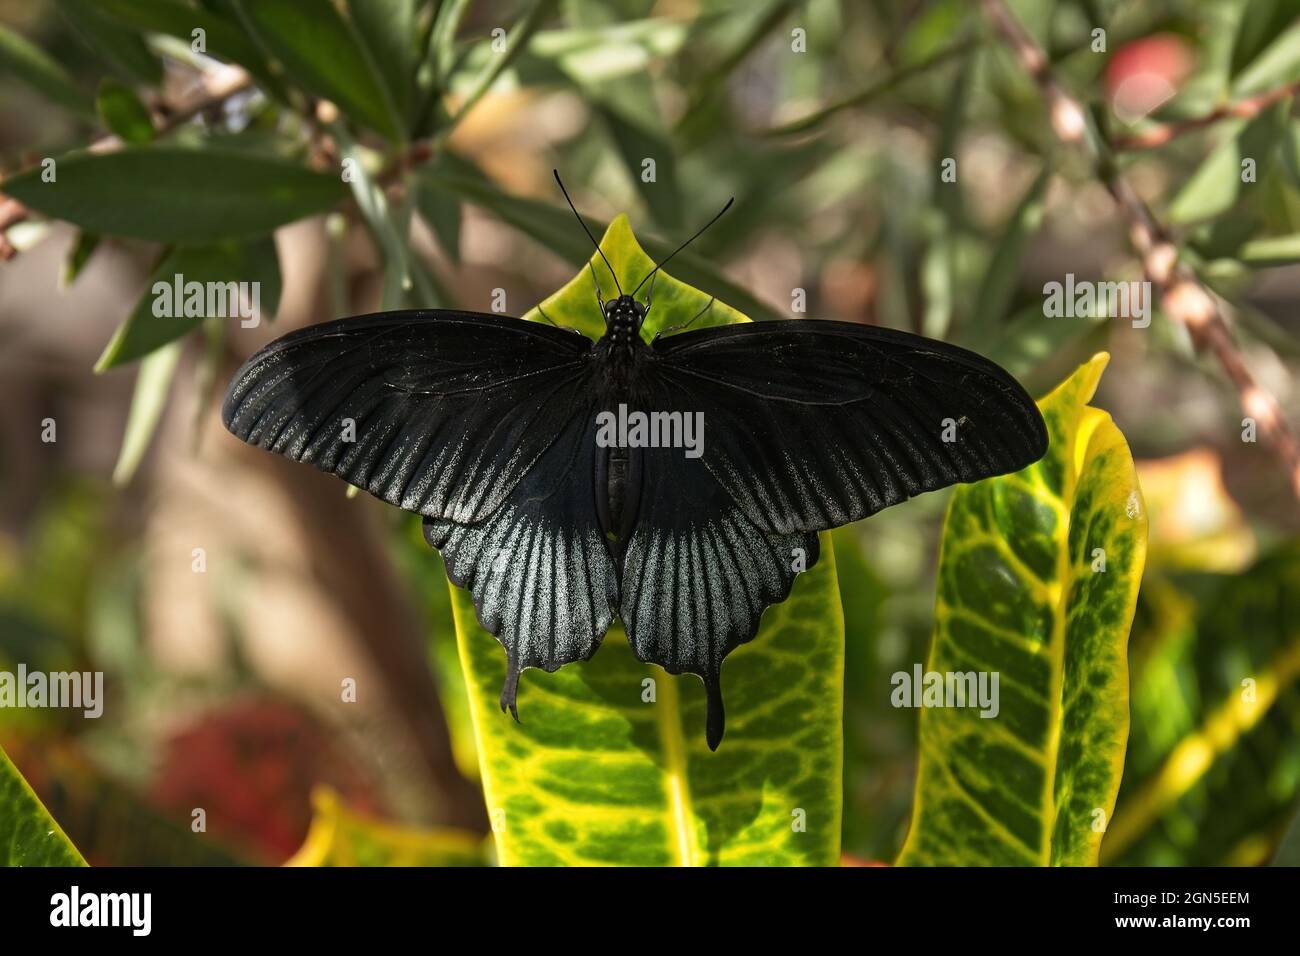 Schwarzer Schmetterling auf Blatt Stockfotografie - Alamy